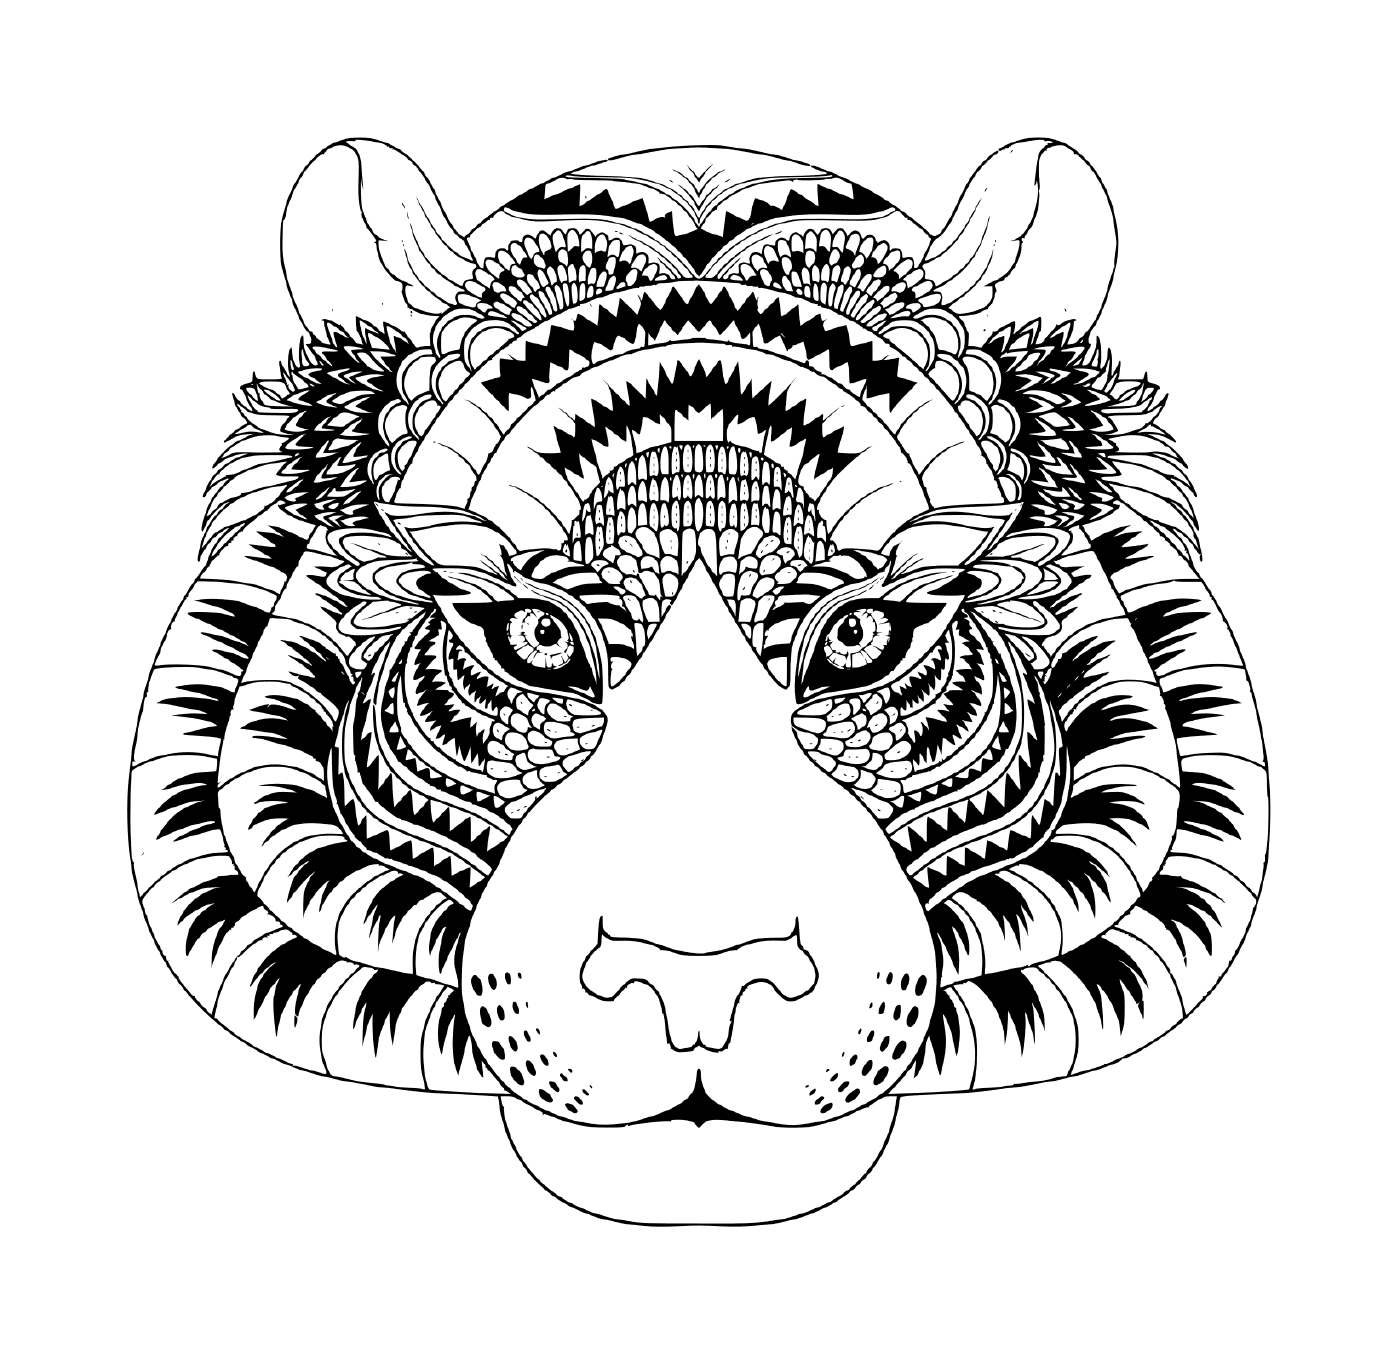  Un tigre con detalles de zentangulo 